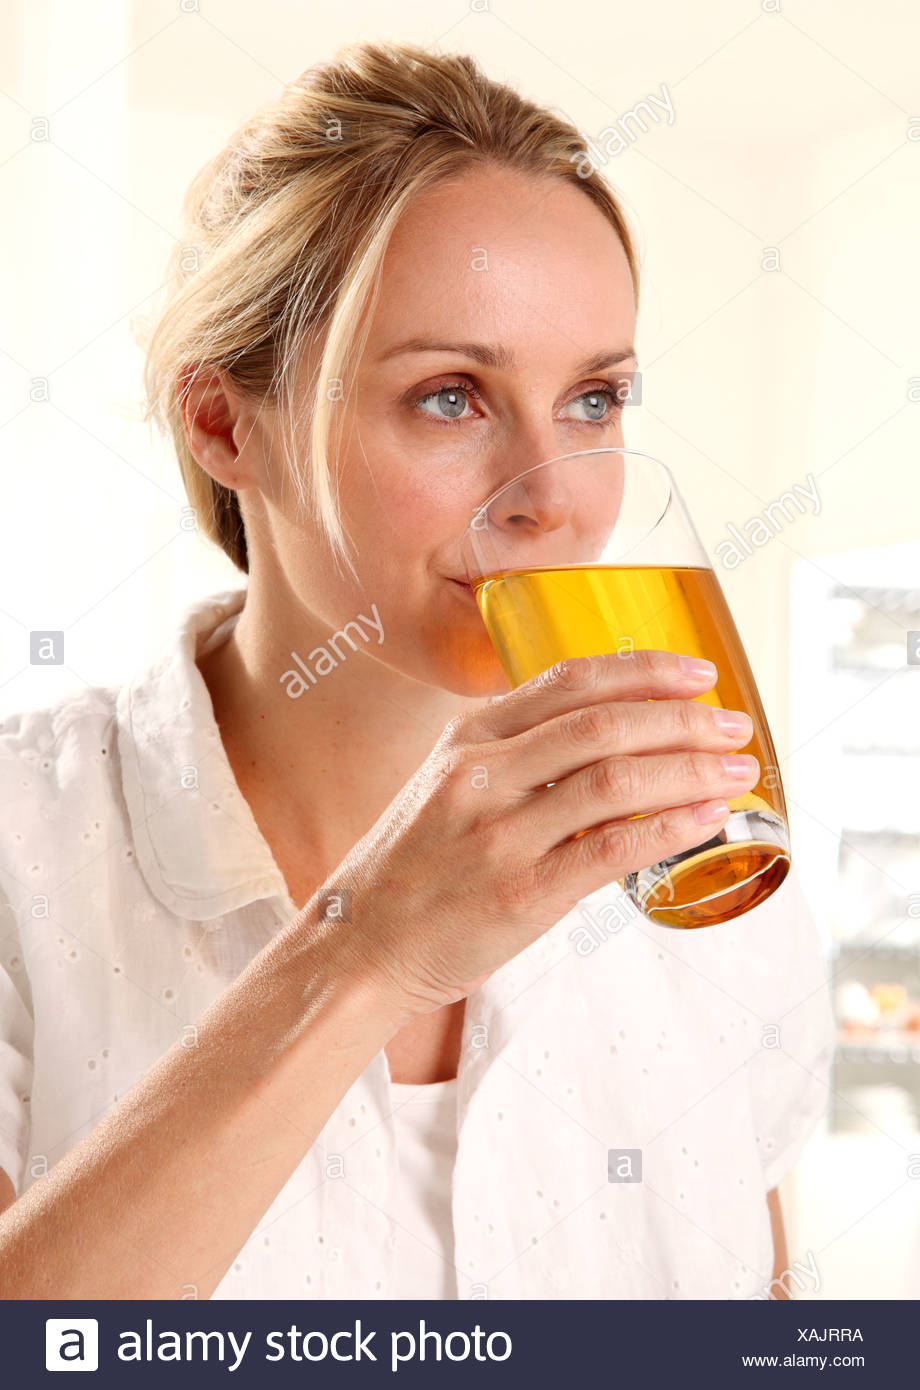 WOMAN DRINKING APPLE JUICE Stock Photo: 281926270 - Alamy